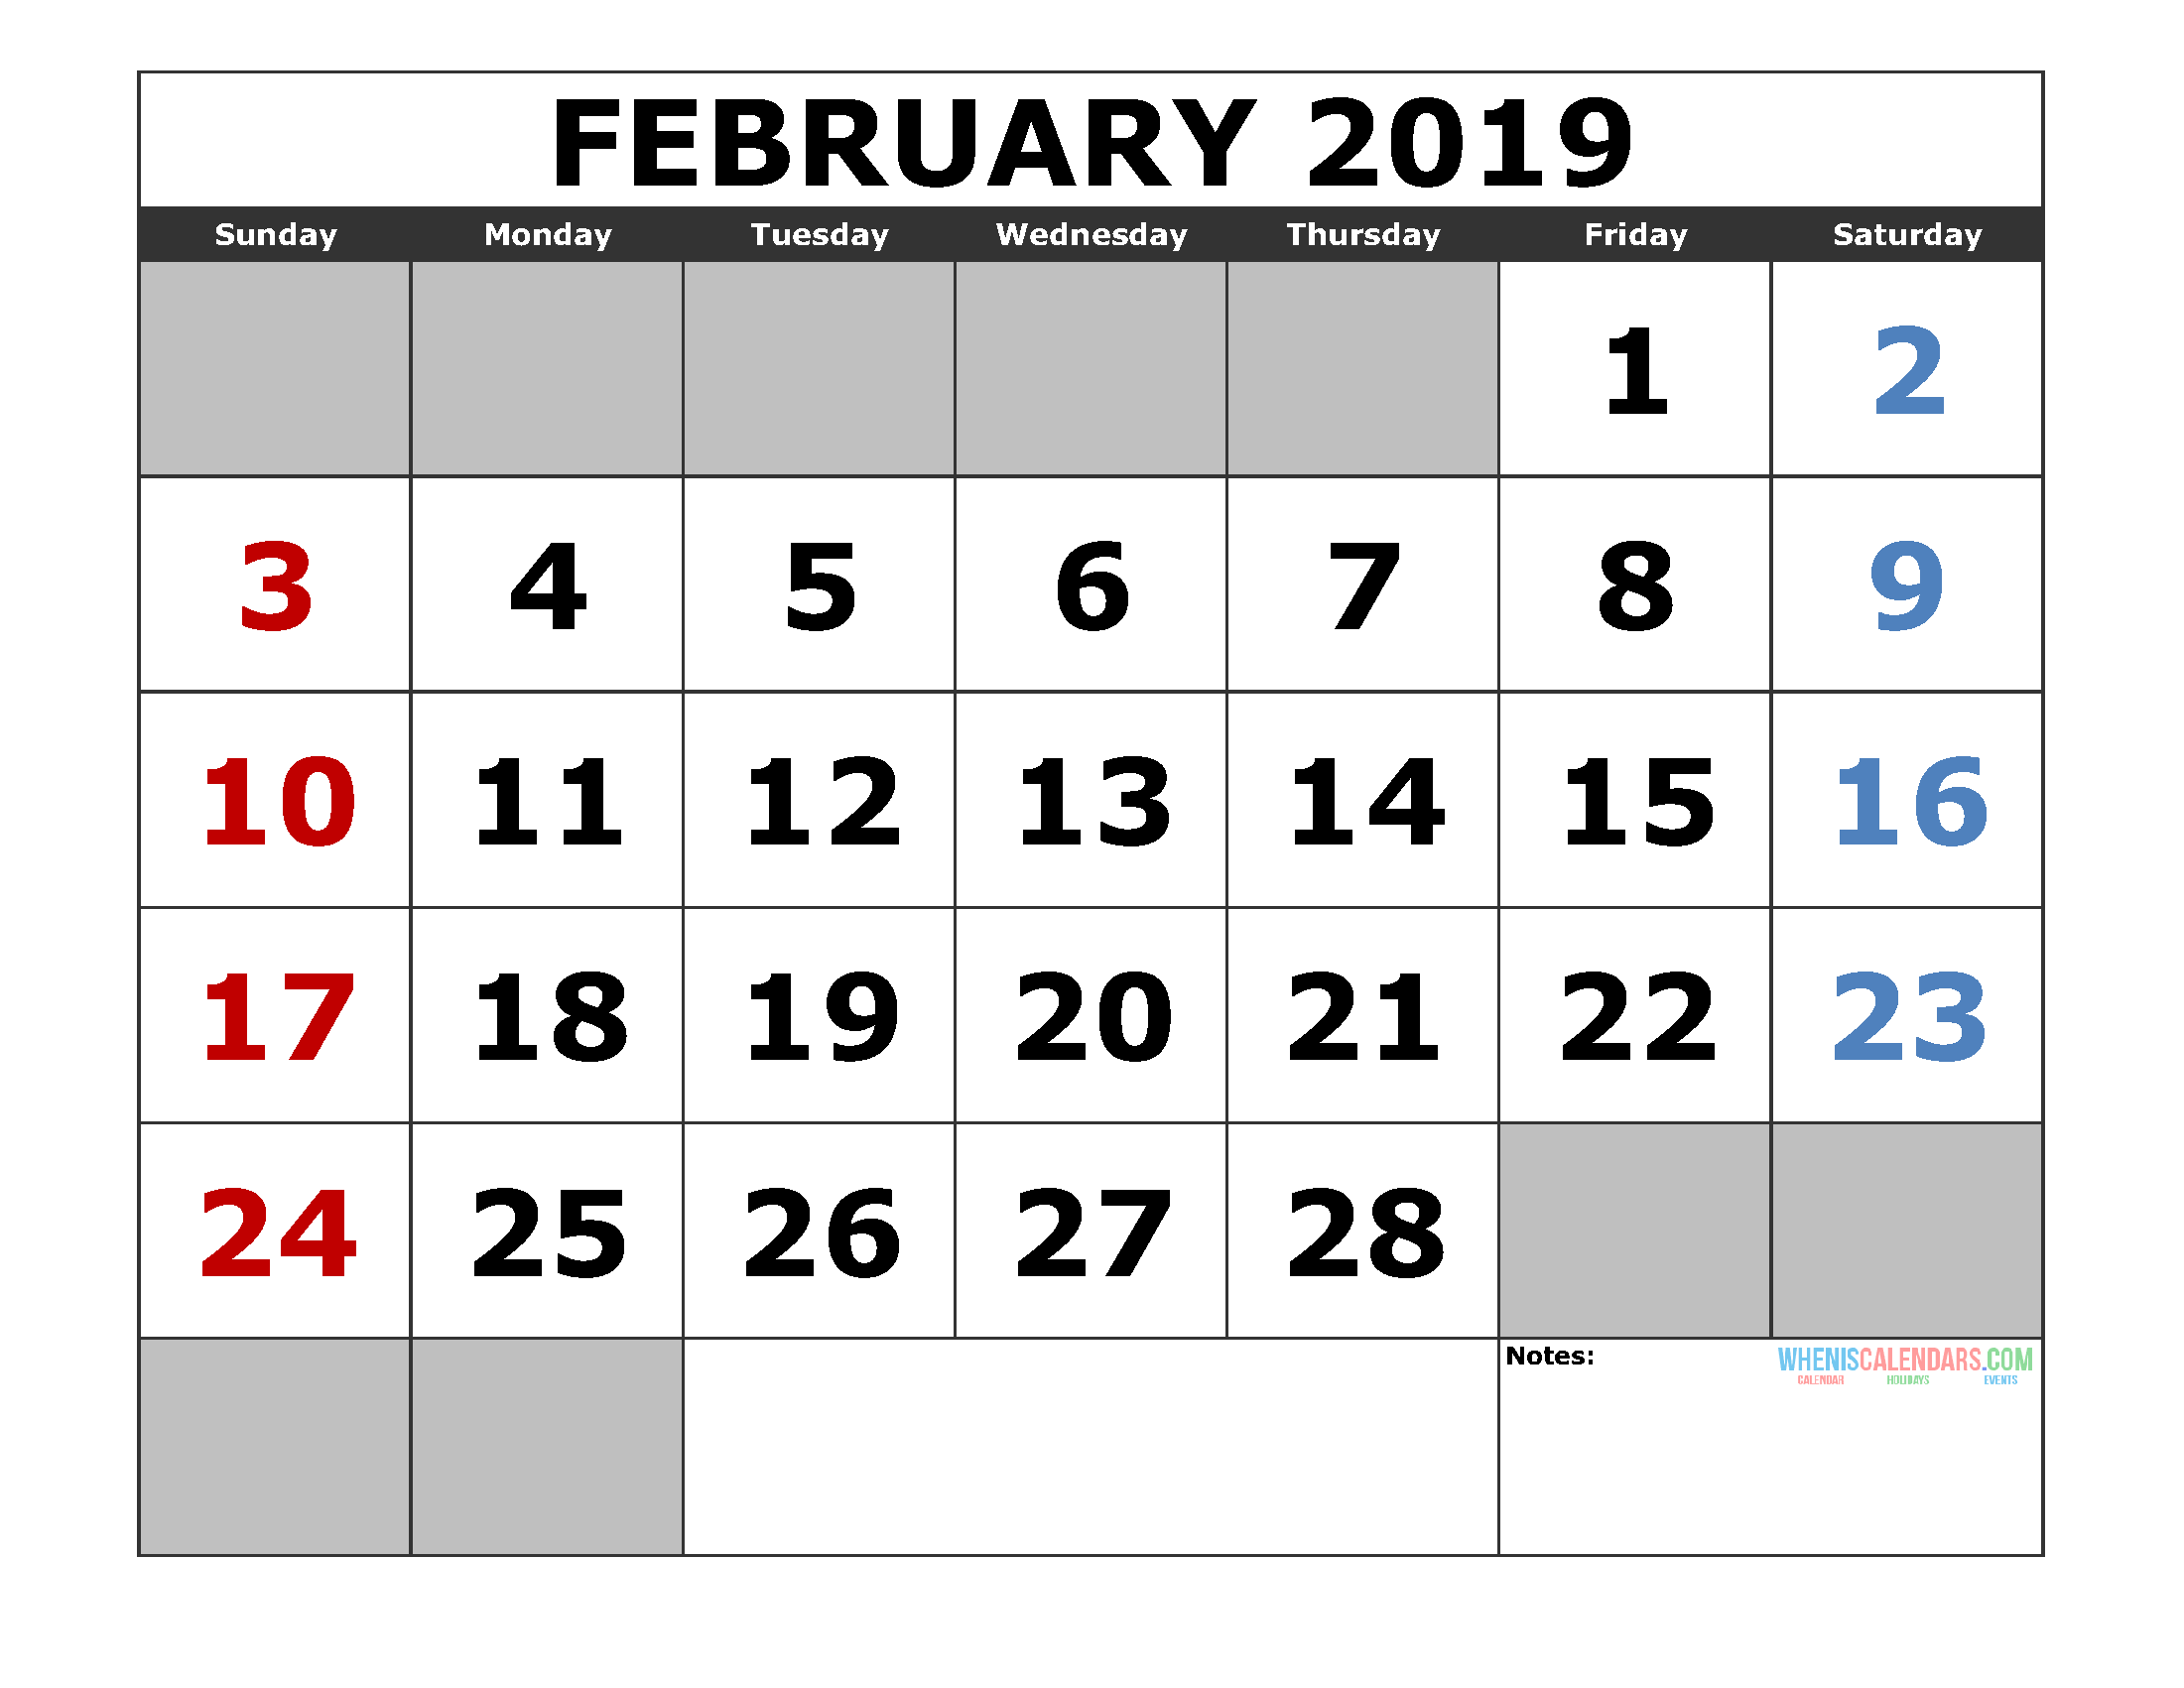 February 2019 Big Dates Calendar